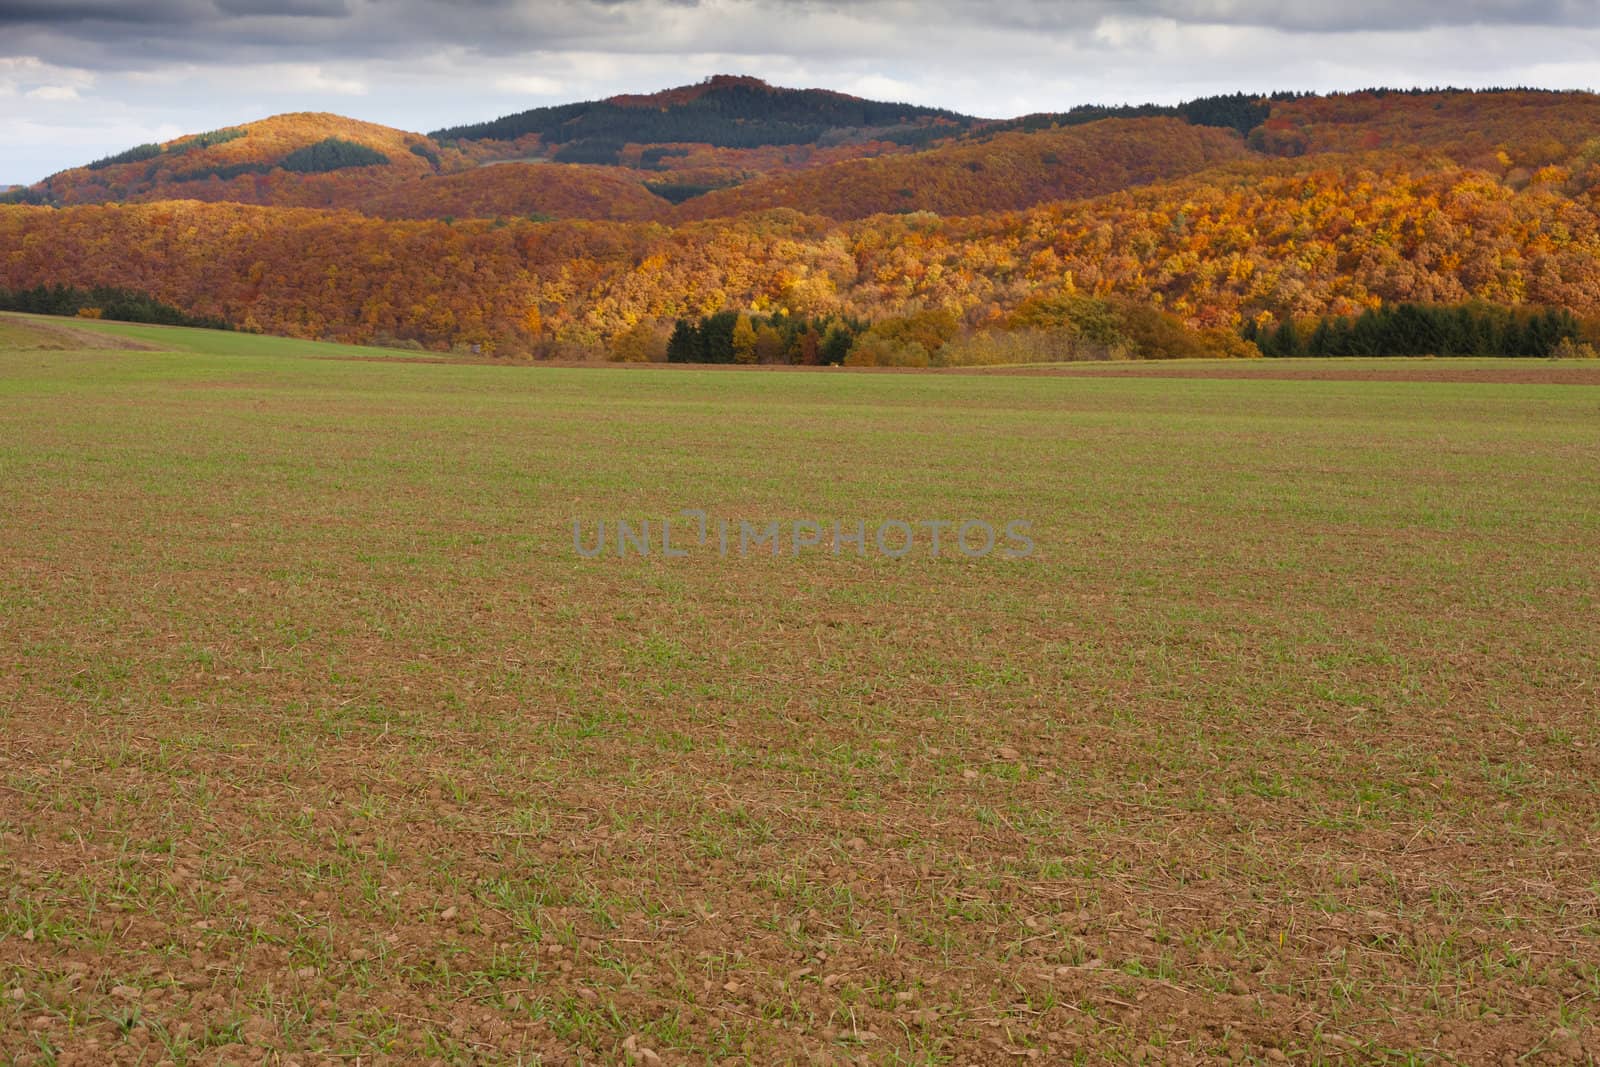 Farmland in Eifel region, Germany, with winter grain starting to grow in fall.